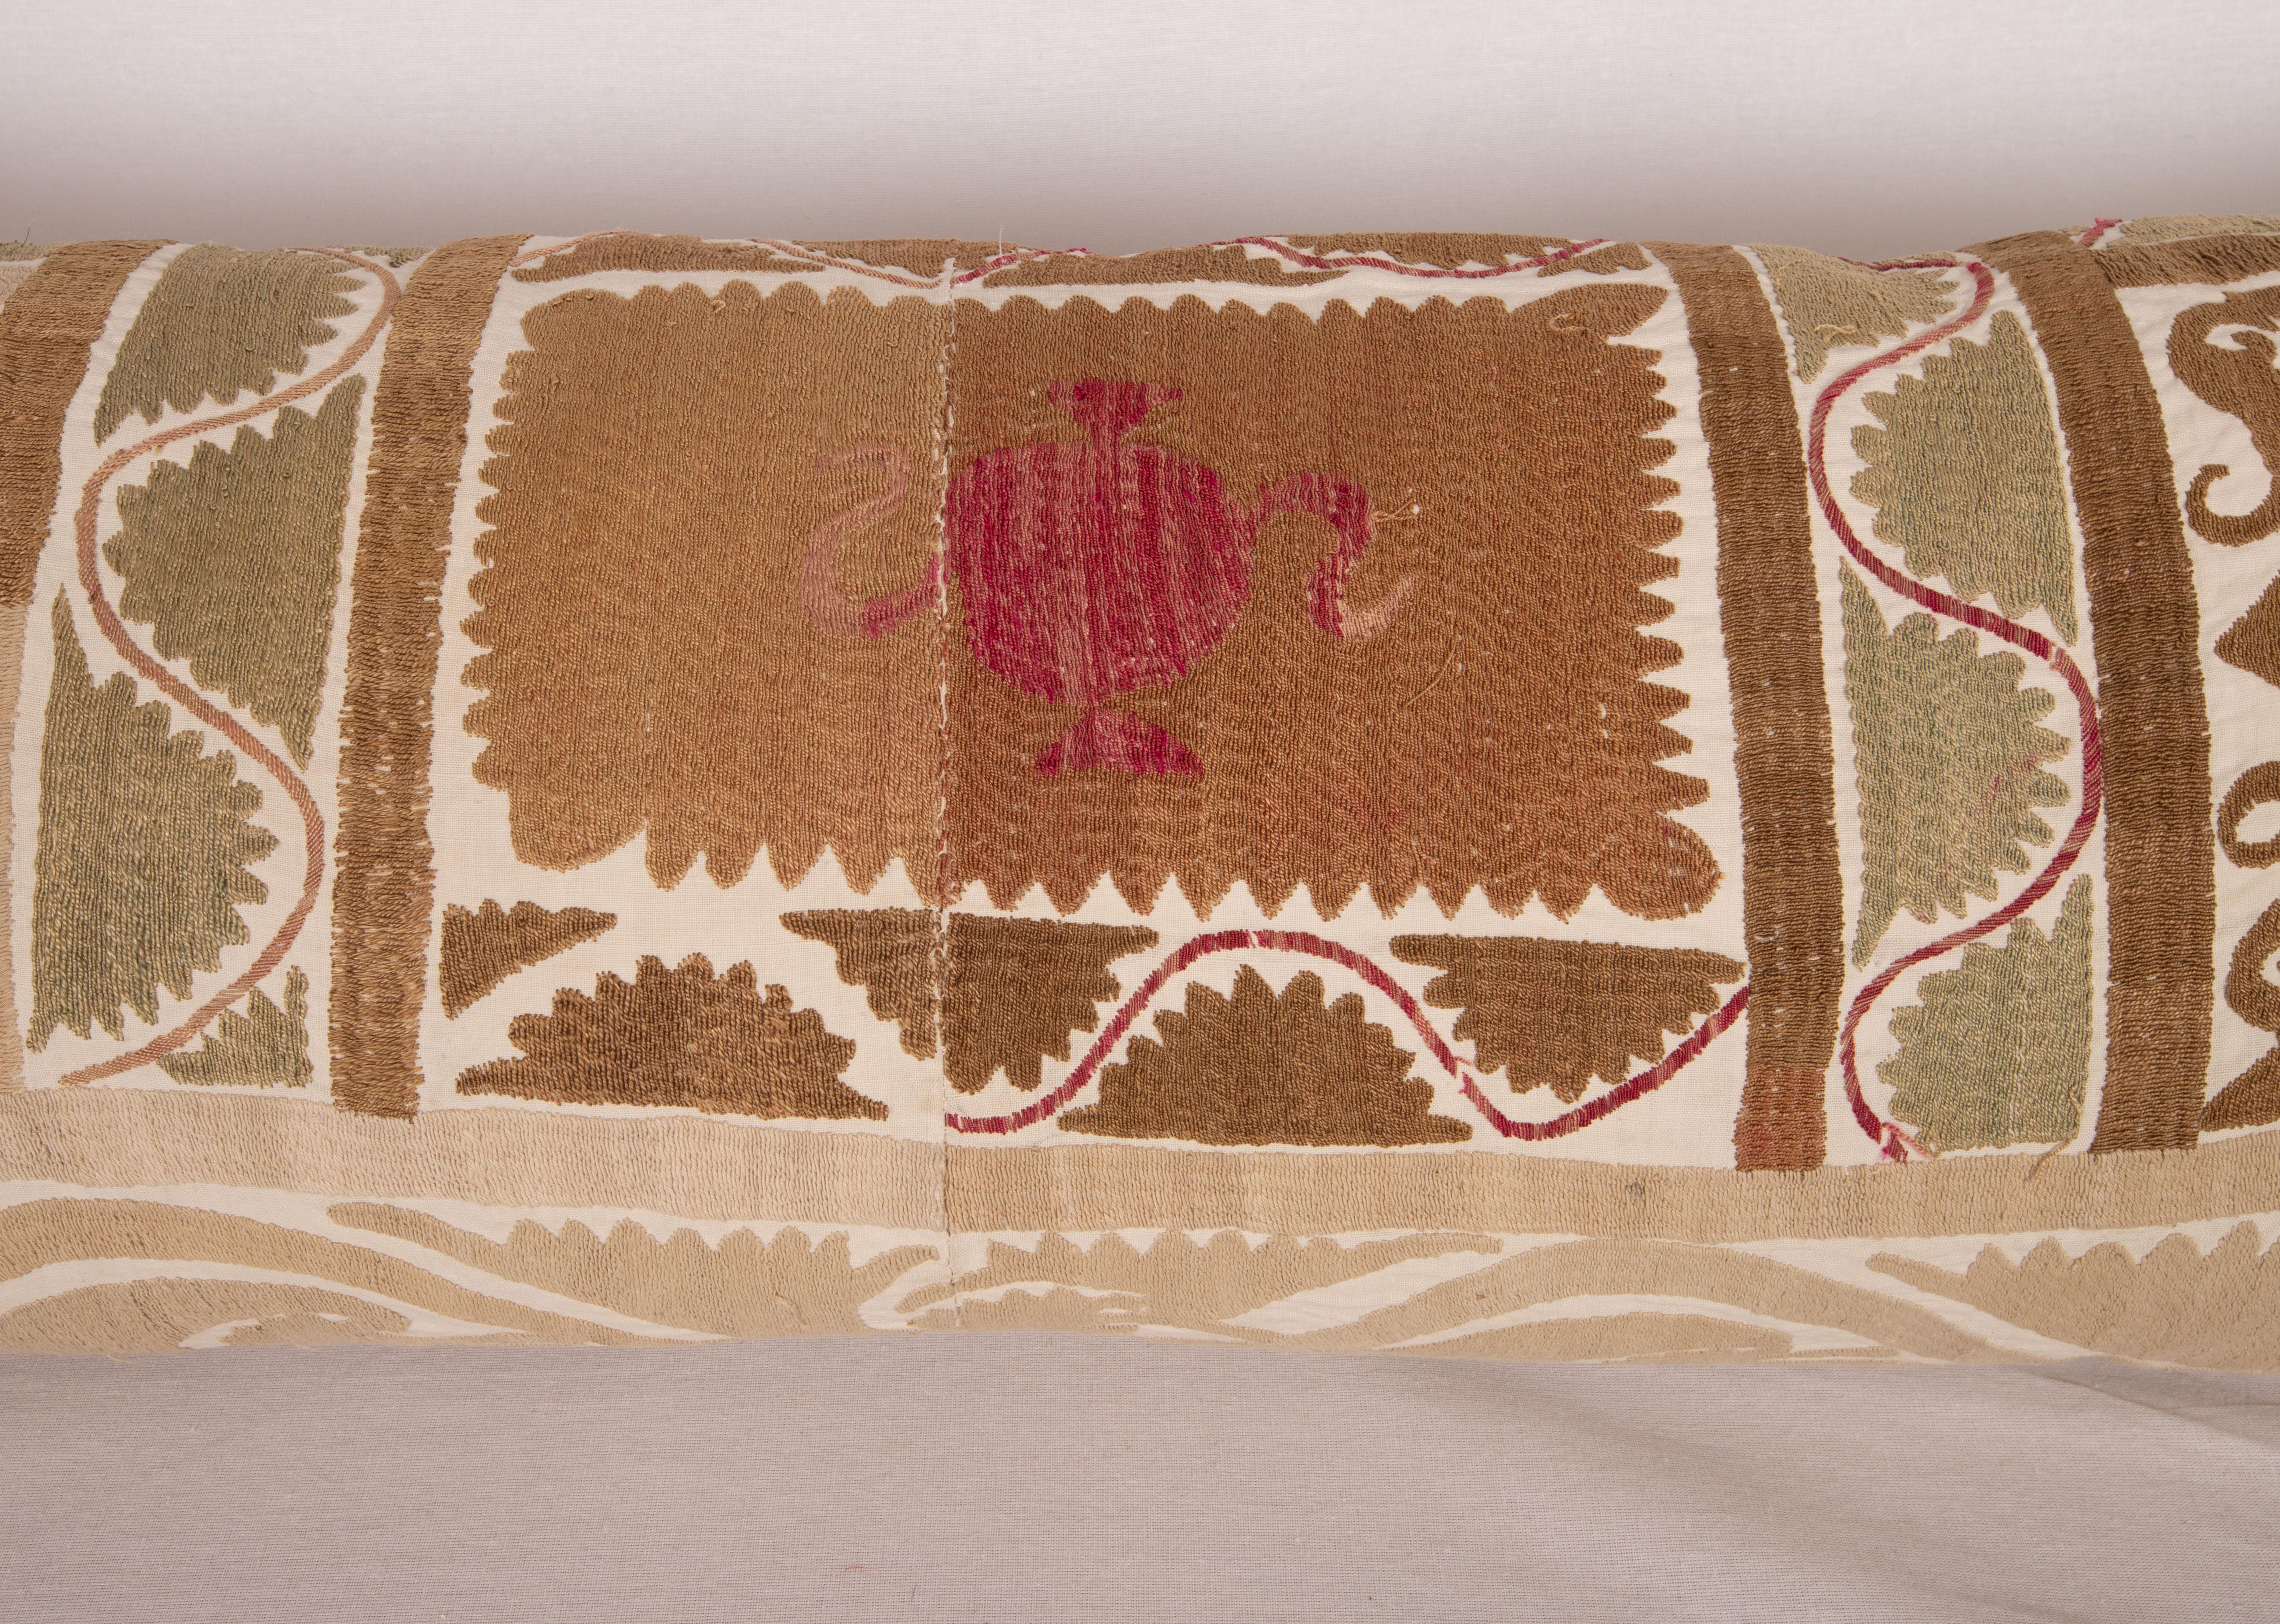 Embroidered Suzani Body Pillow Case, Uzbekistan, 1970s For Sale